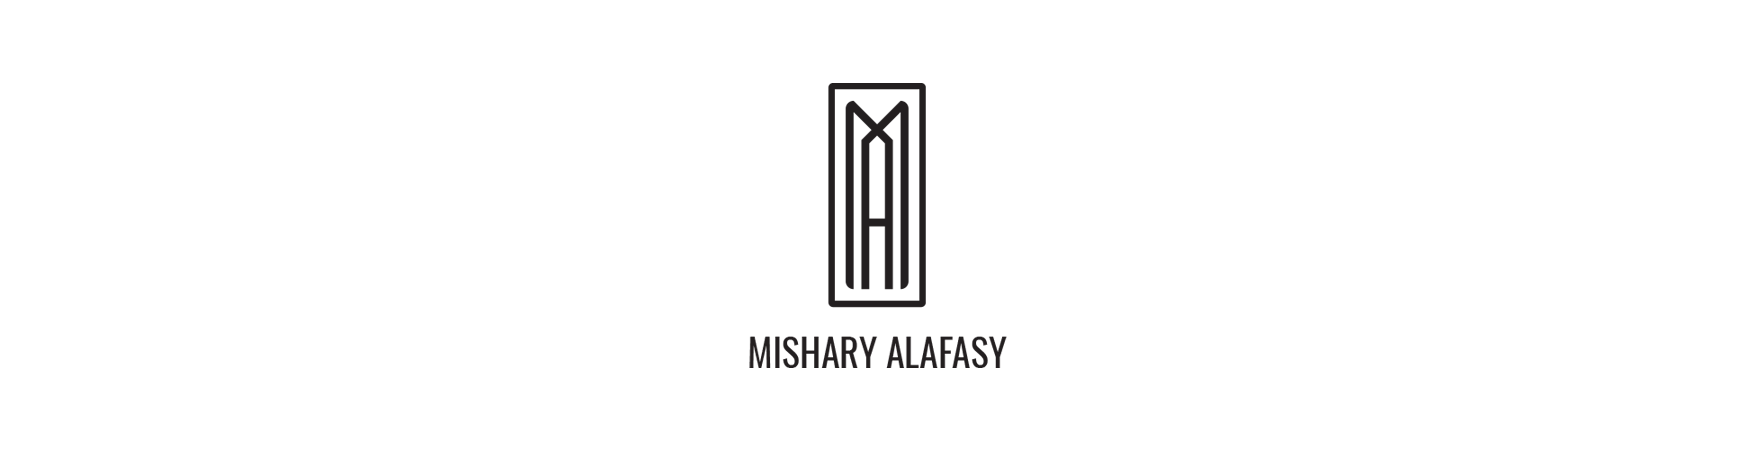 Mishary Alafasy